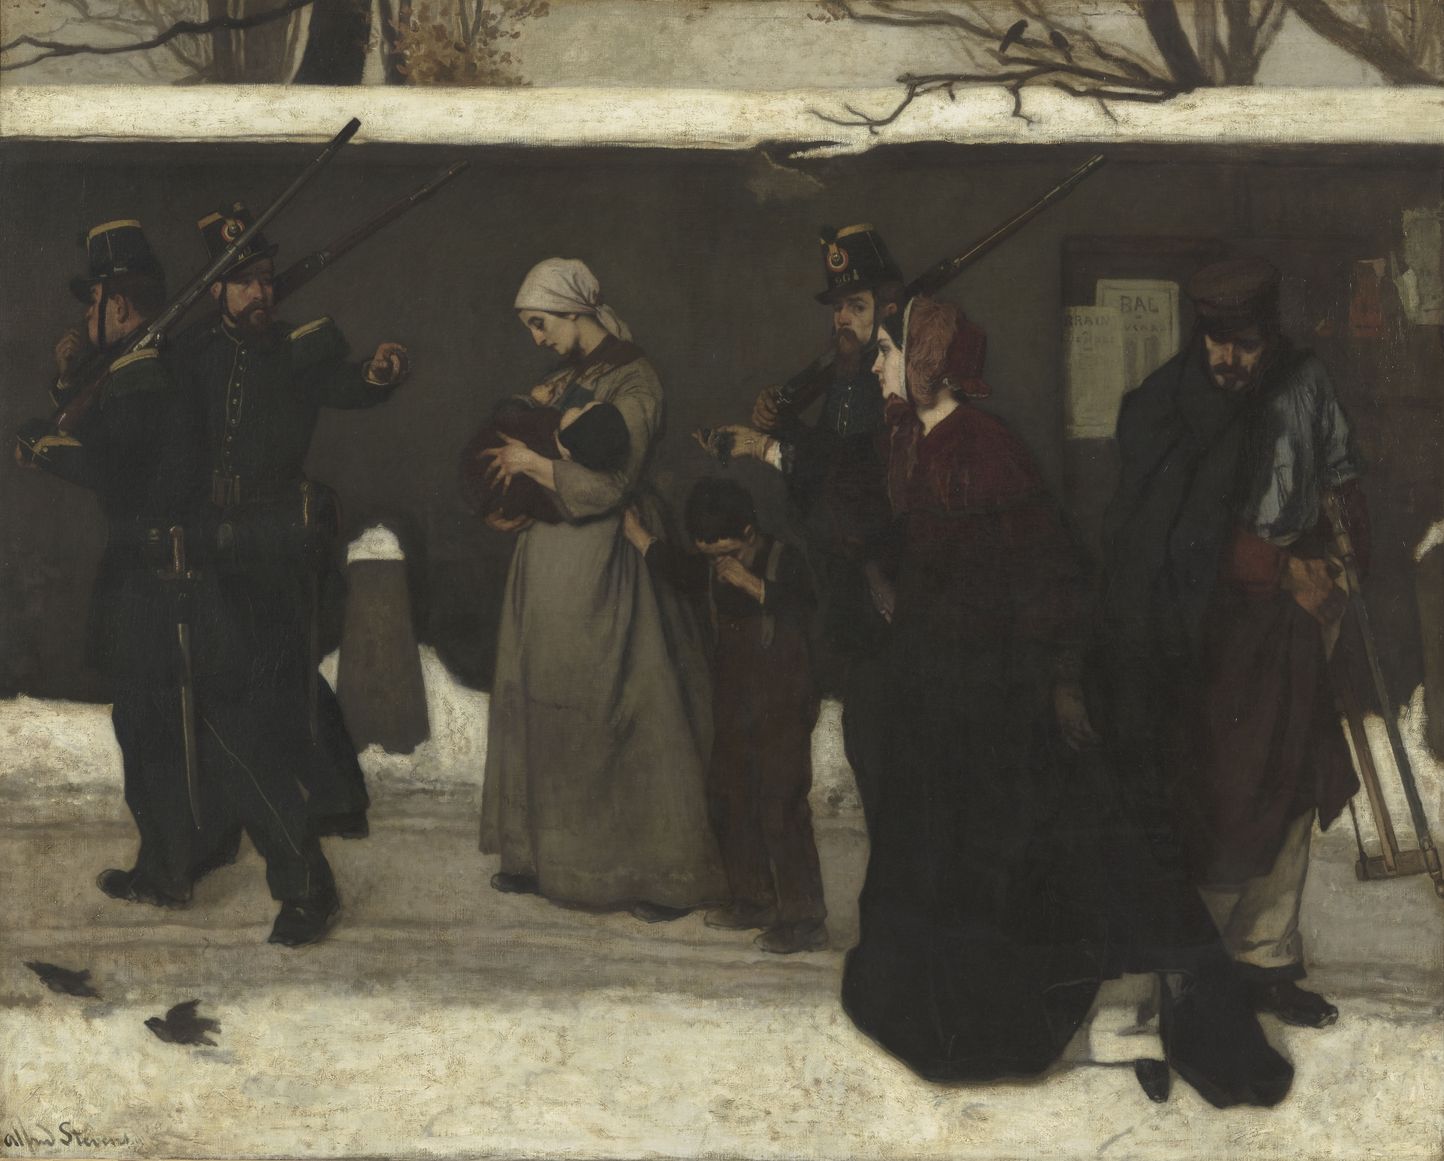 Ce qu'on appelle le vagabondage (What is called vagrancy), 1855, by Alfred Stevens